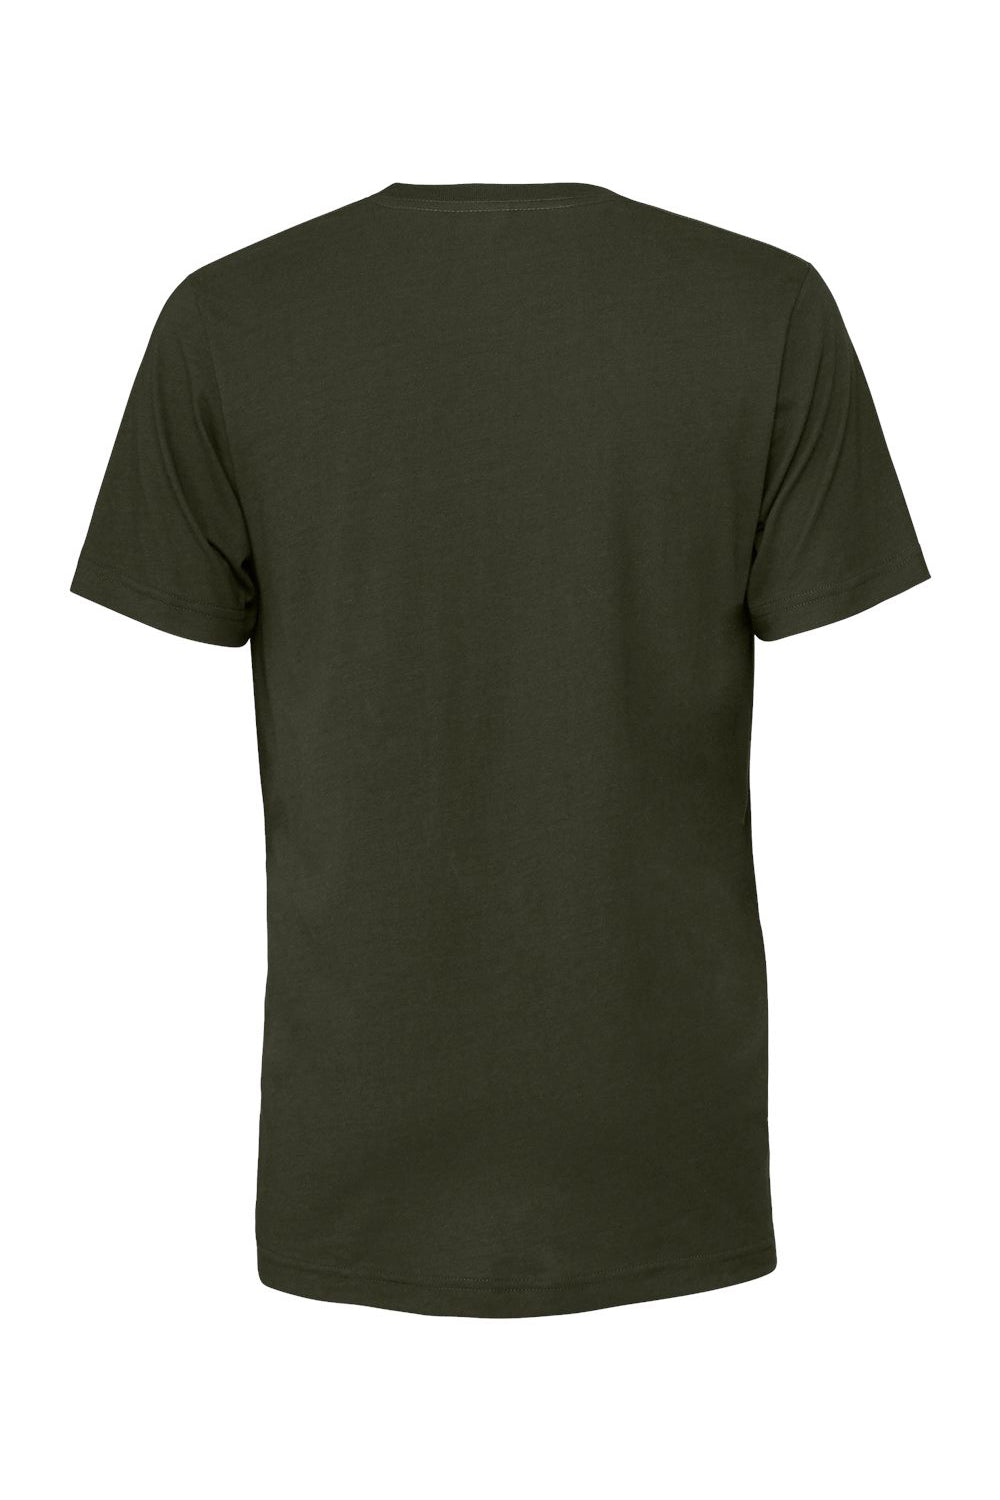 Bella + Canvas BC3001/3001C Mens Jersey Short Sleeve Crewneck T-Shirt Dark Olive Green Flat Back